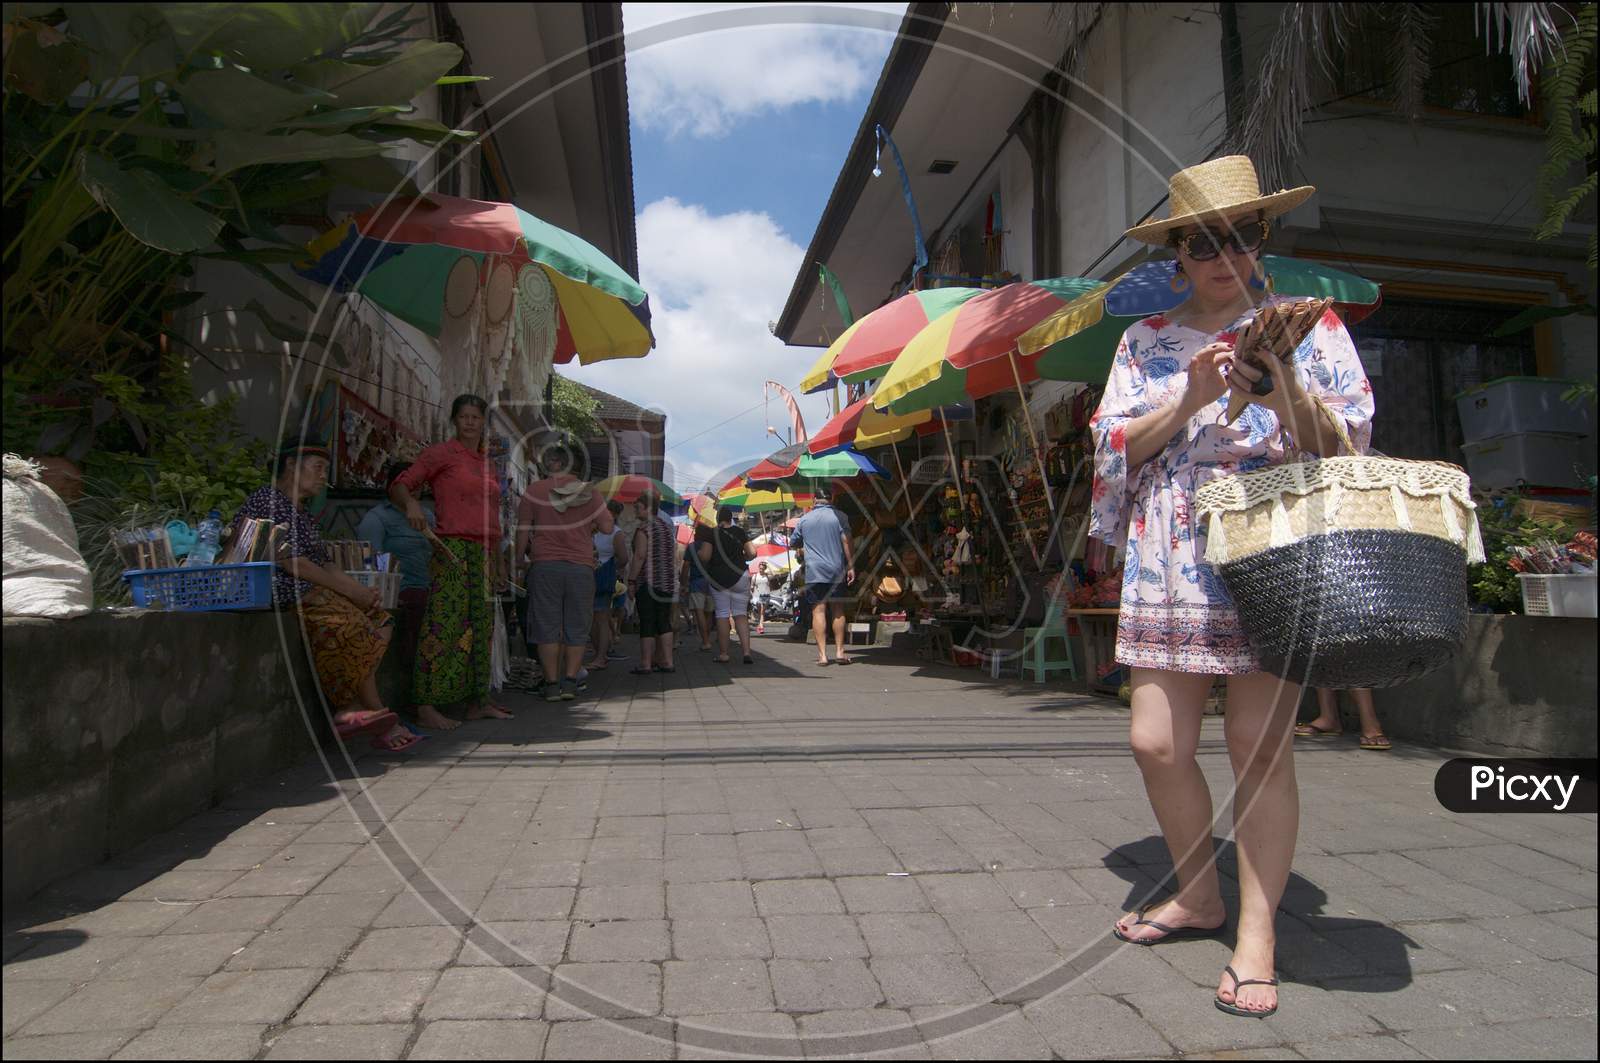 Ubud Art Market With Tourist And Vendors